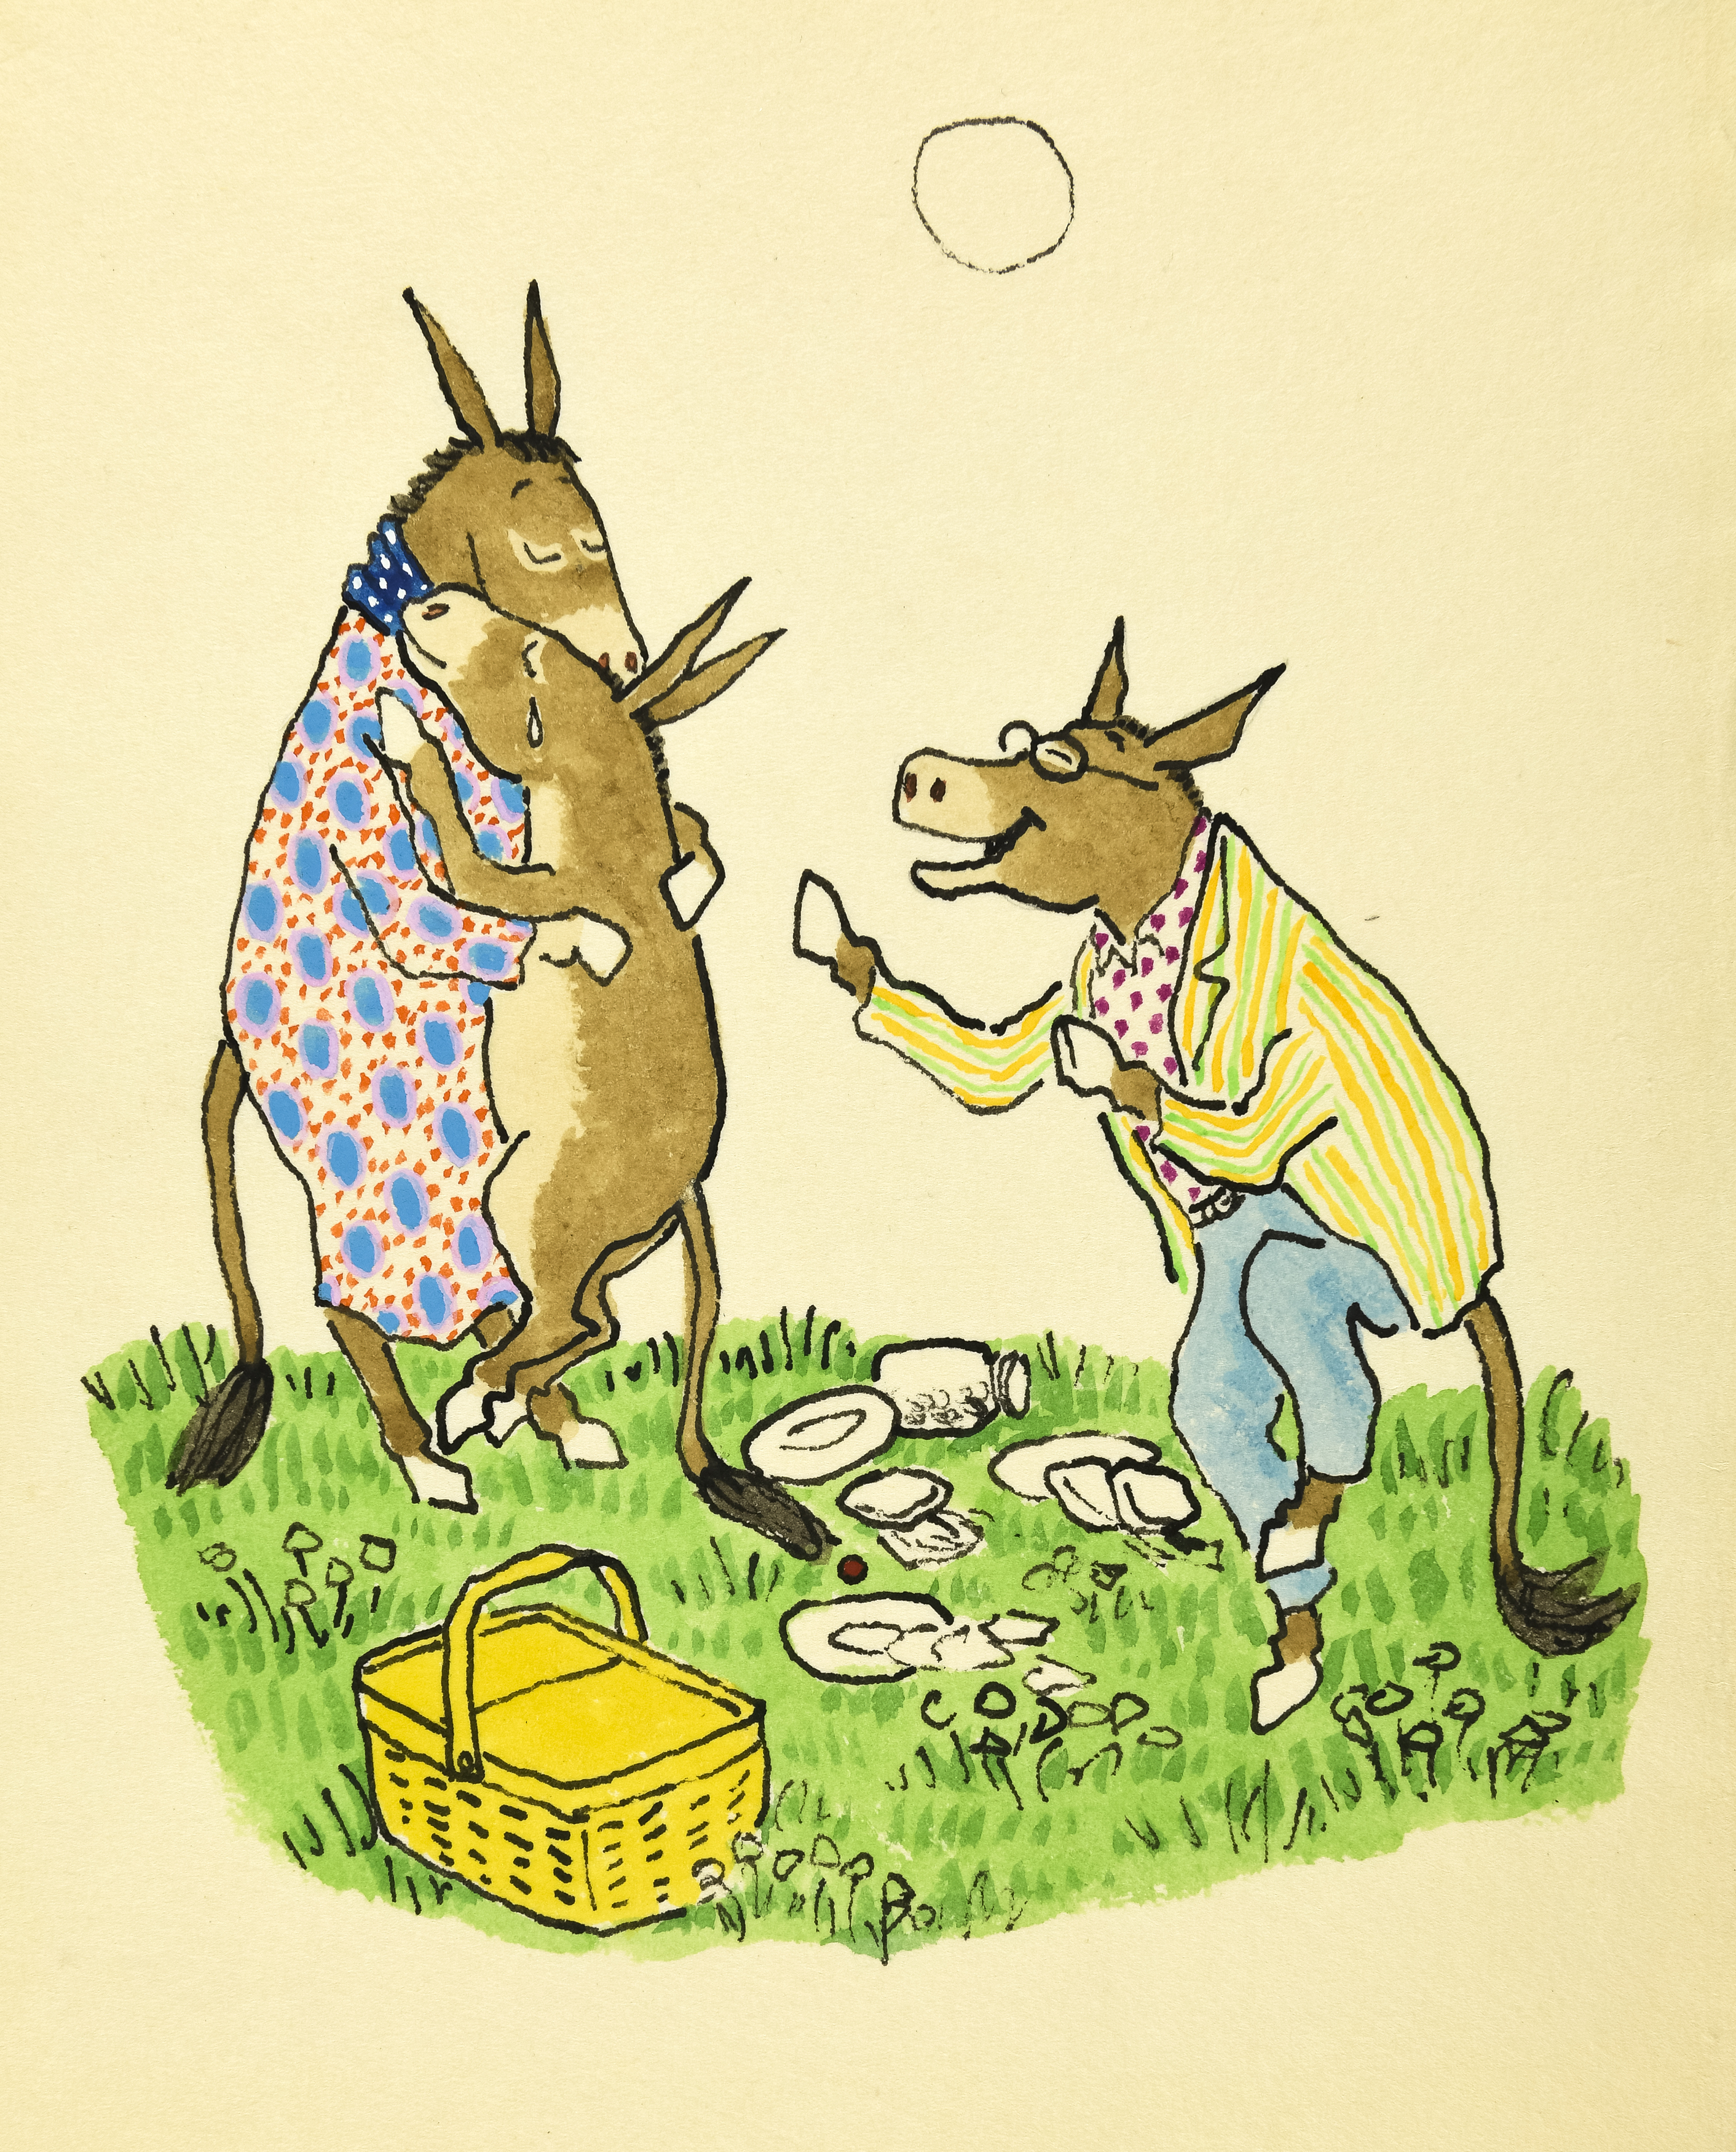 Illustration of donkeys embracing and celebrating at picnic scene. 